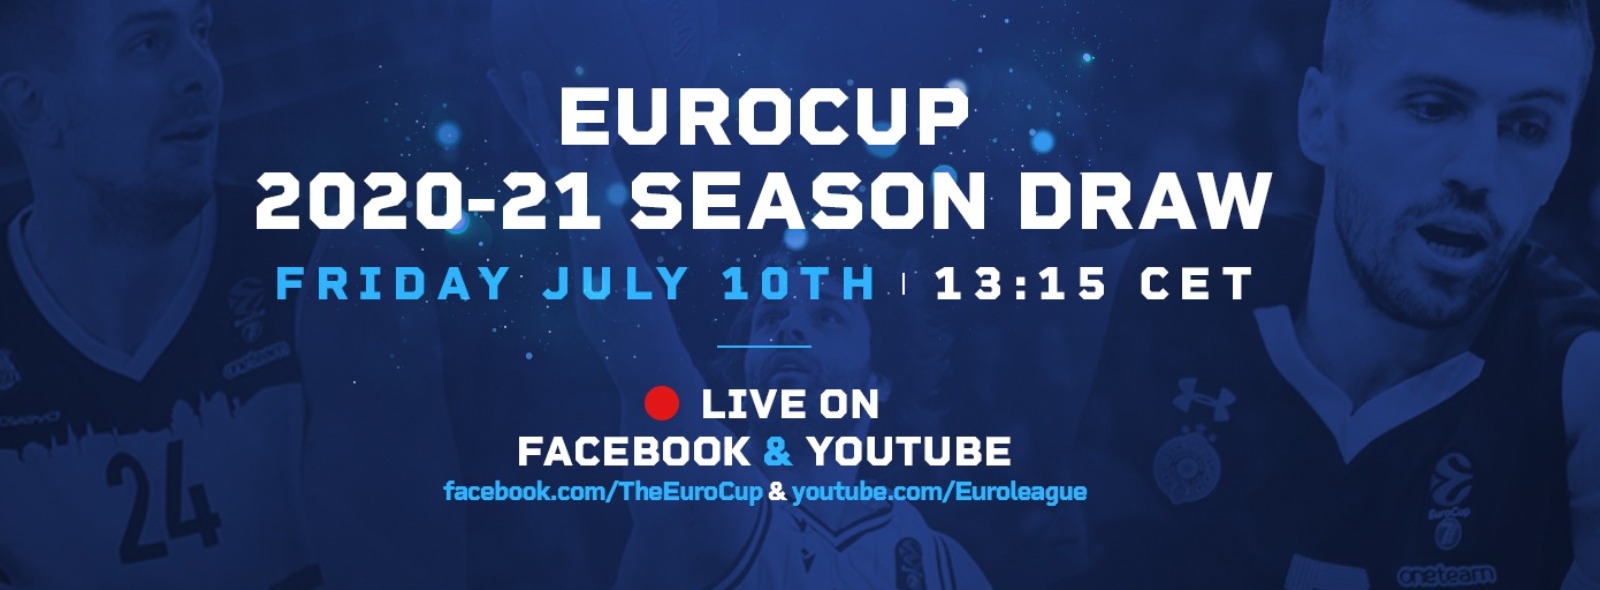 Eurocup - Tirage au sort le vendredi 10 juillet ! 